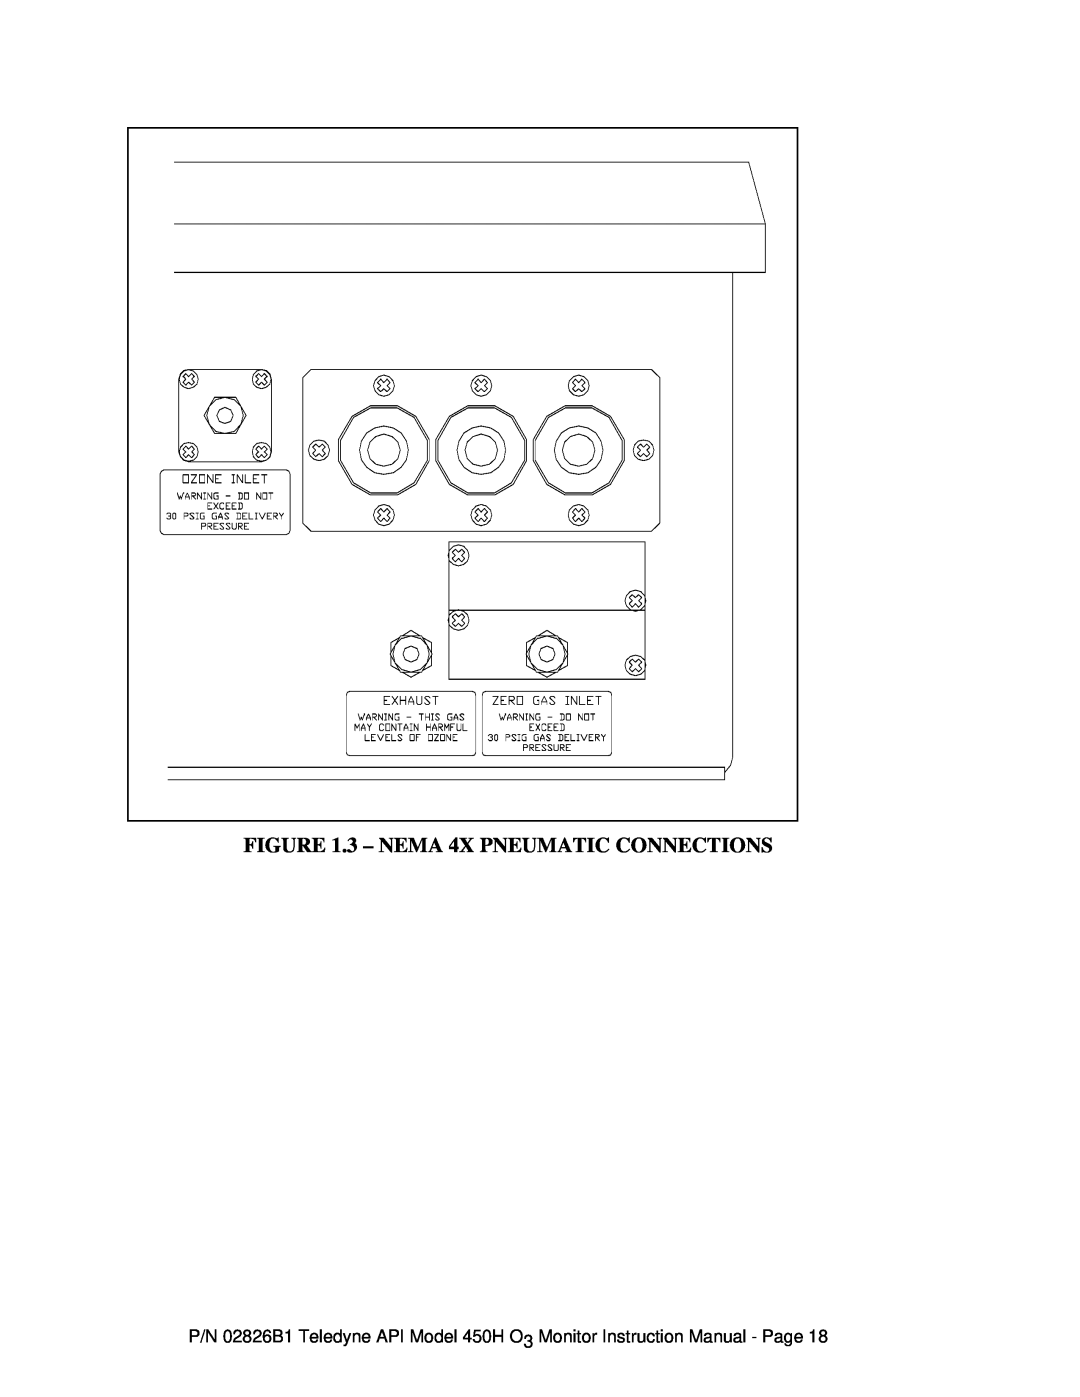 Teledyne 450H instruction manual 3 - NEMA 4X PNEUMATIC CONNECTIONS 